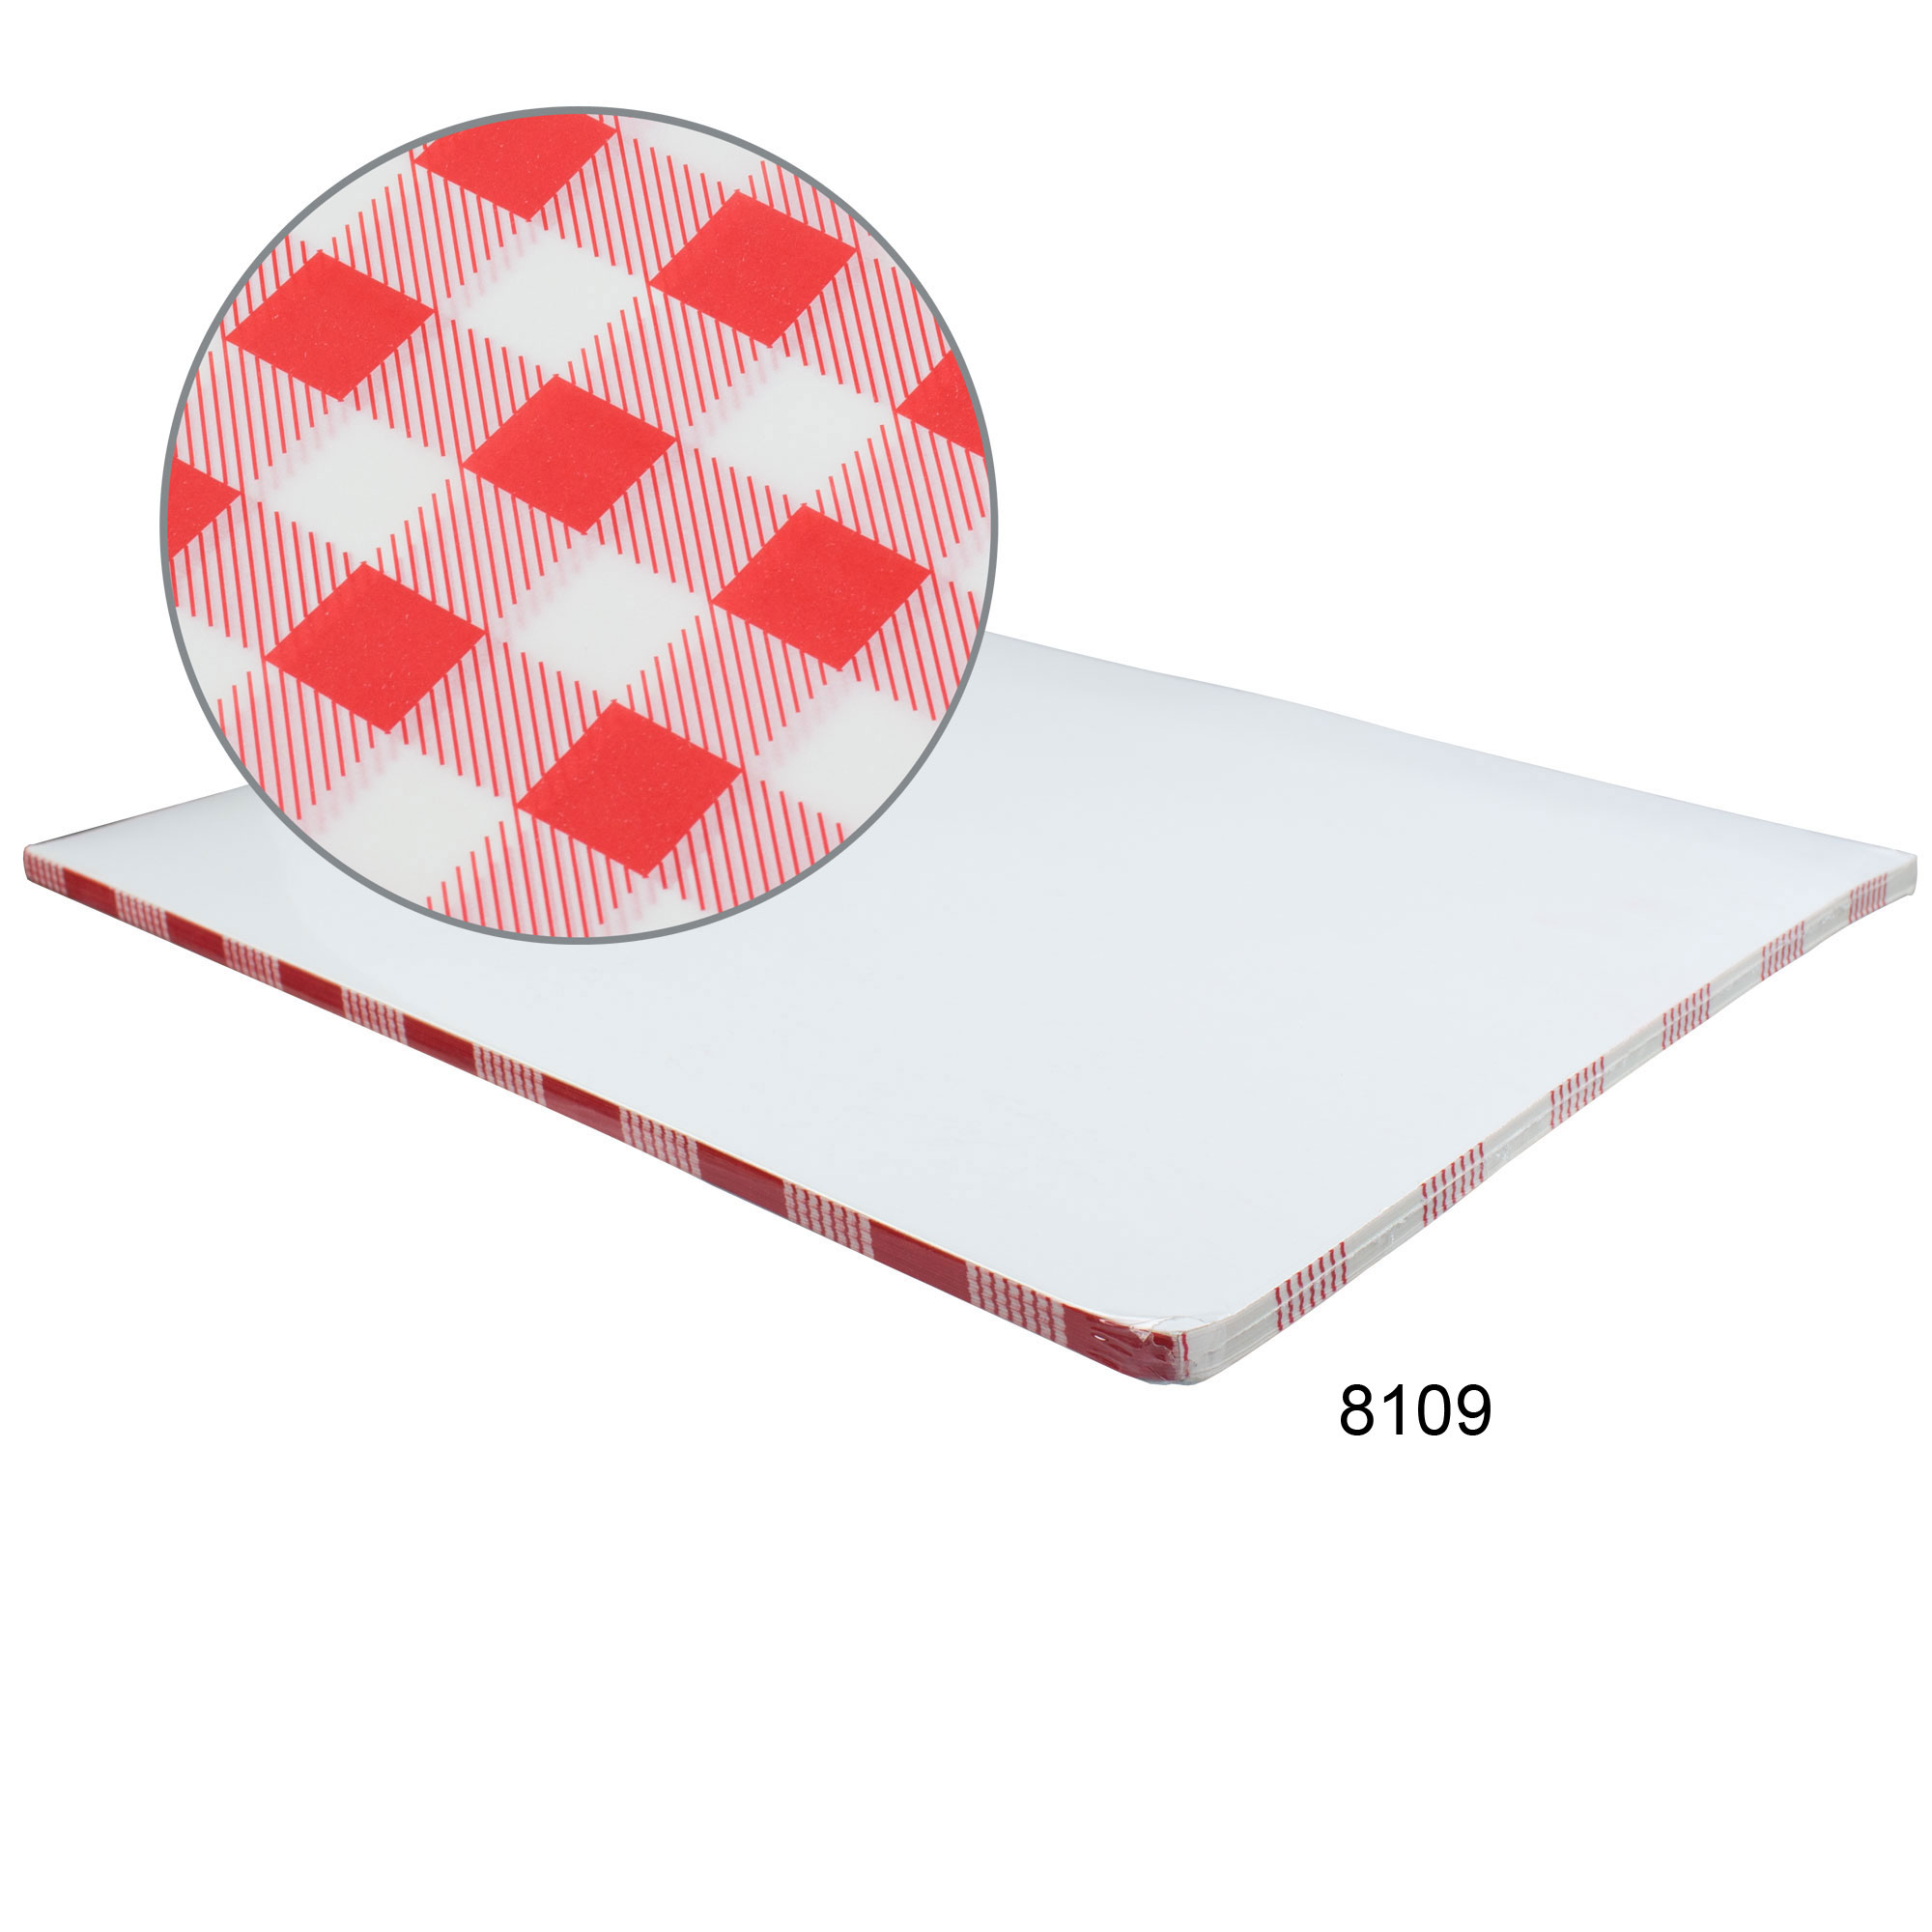 Einschlagpapier fettdicht, Karo rot - 25x25cm (200 Stk.)